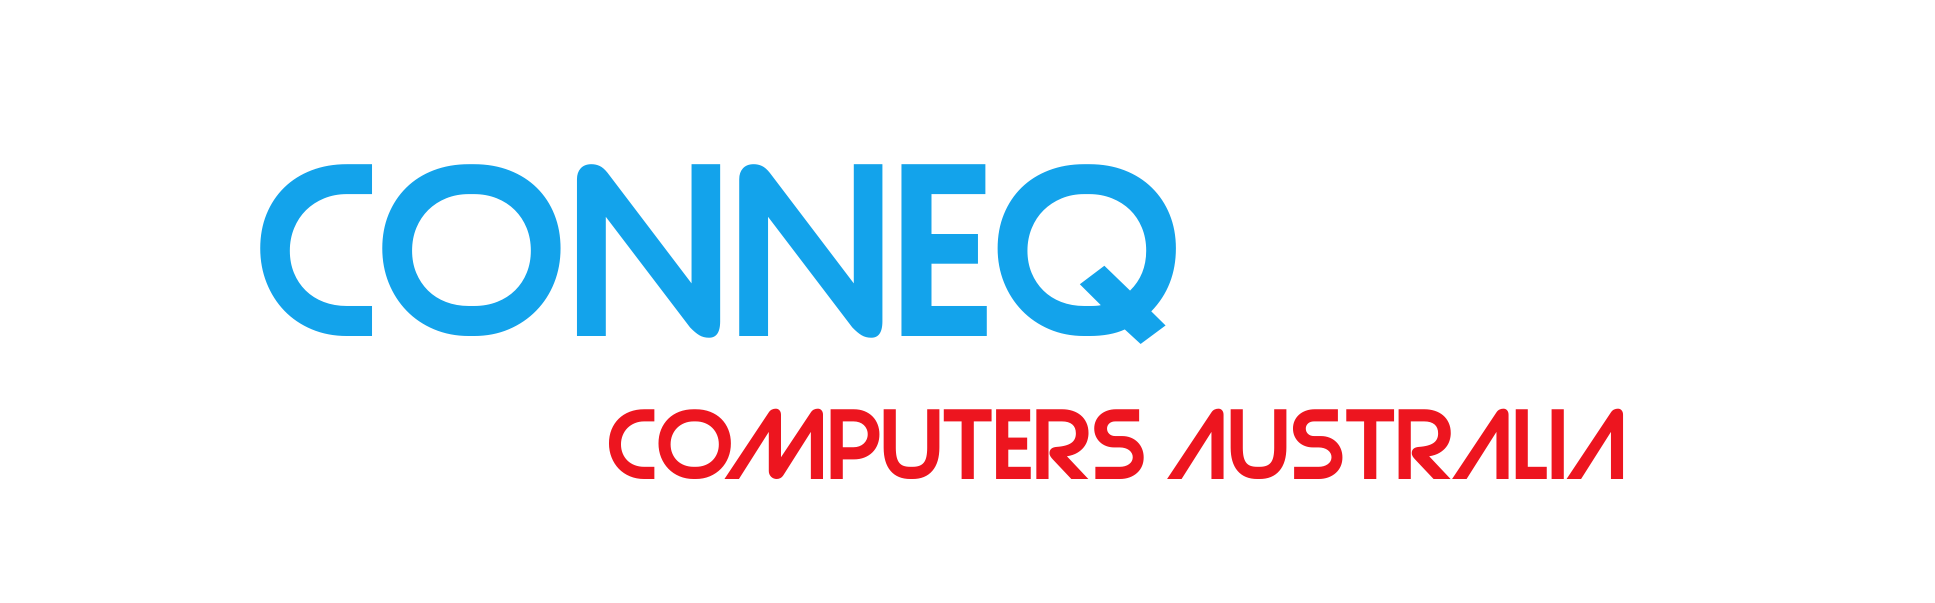 Conneq Computers